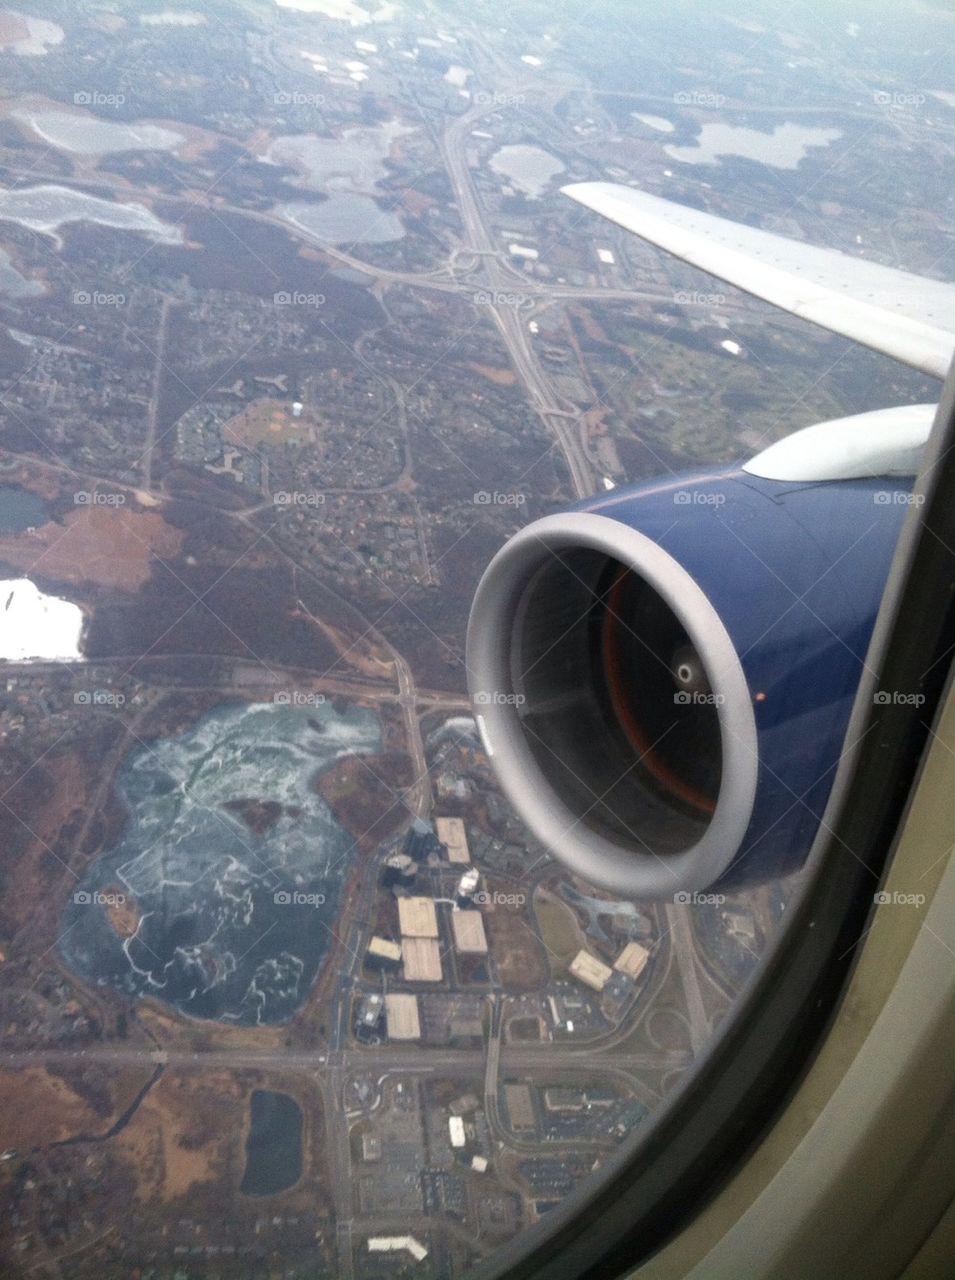 Landing in Minneapolis